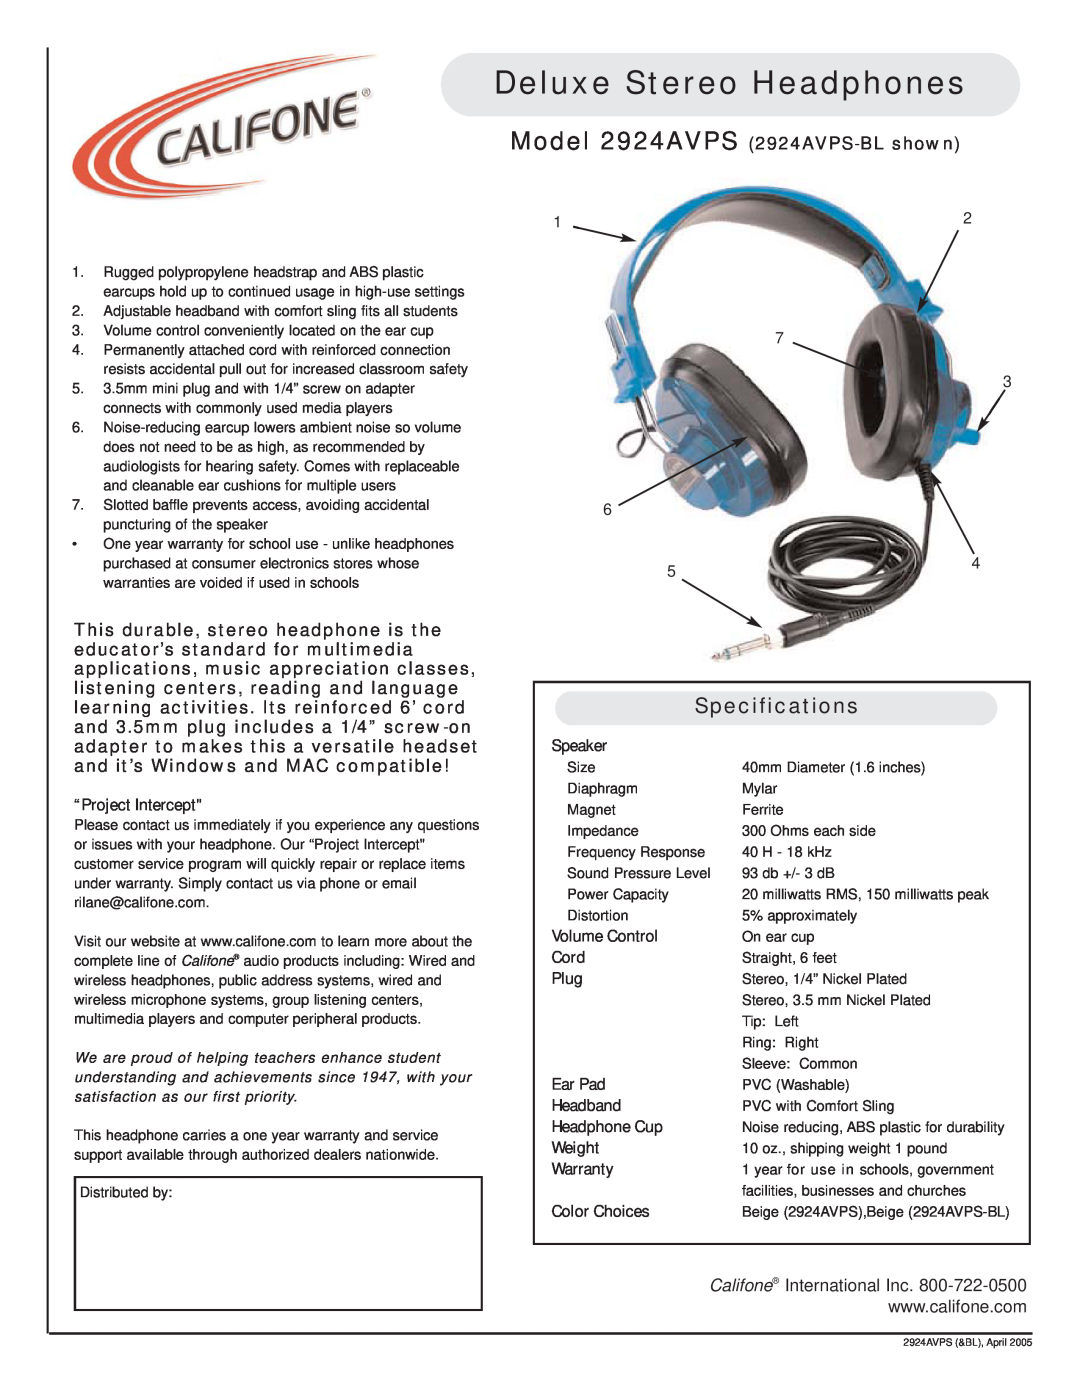 Califone 2924AVPS specifications Deluxe Stereo Headphones, Specifications 